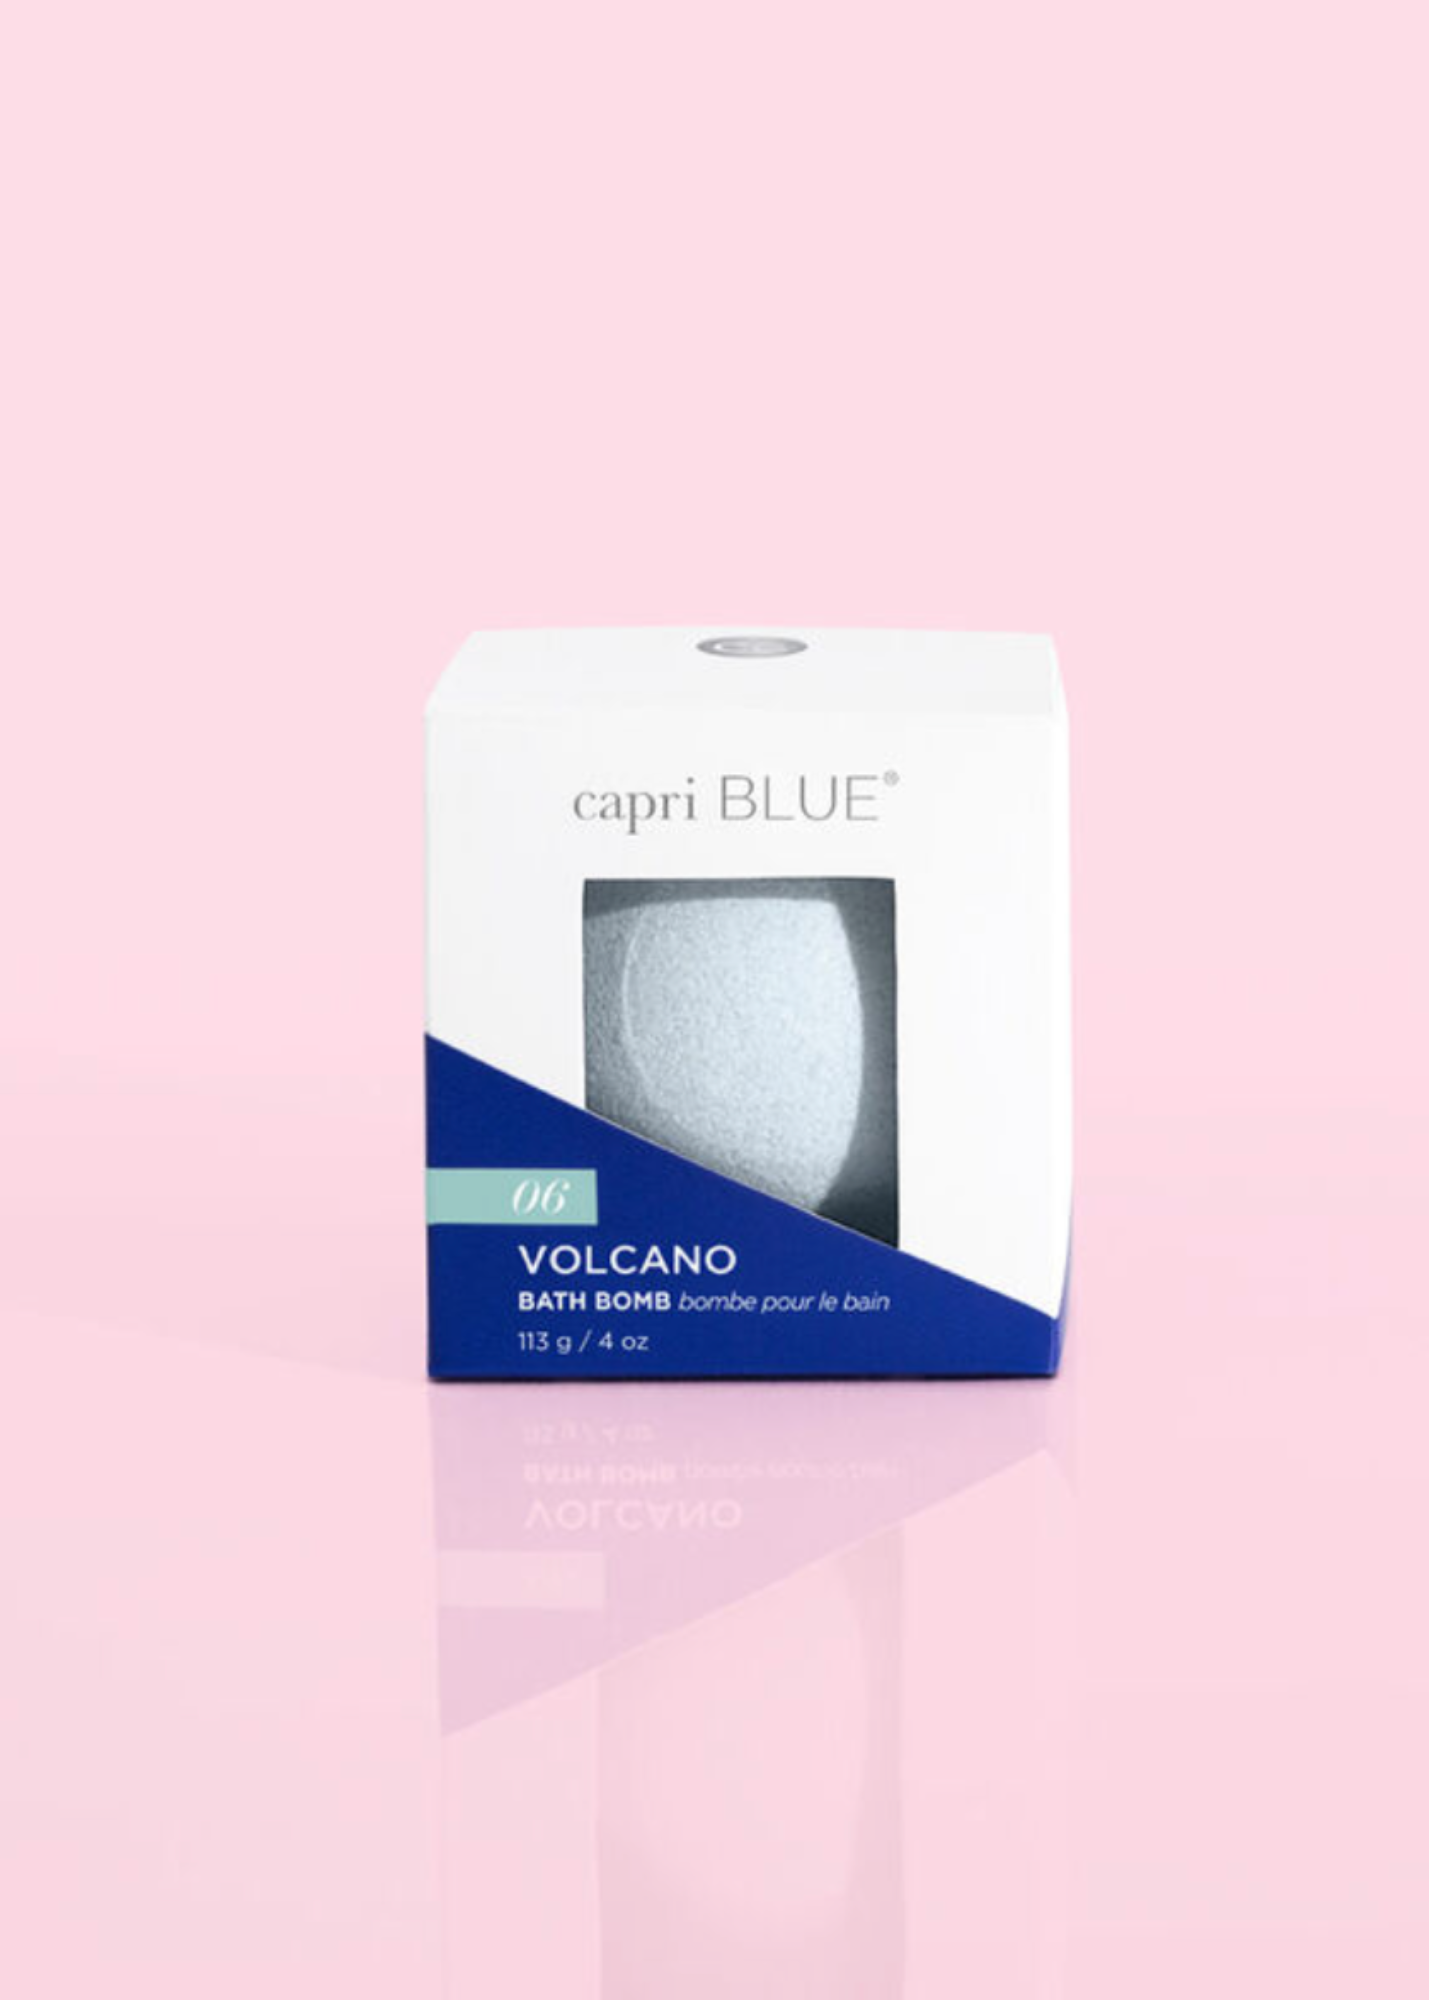 Capri Blue® Bath Bomb Gifts